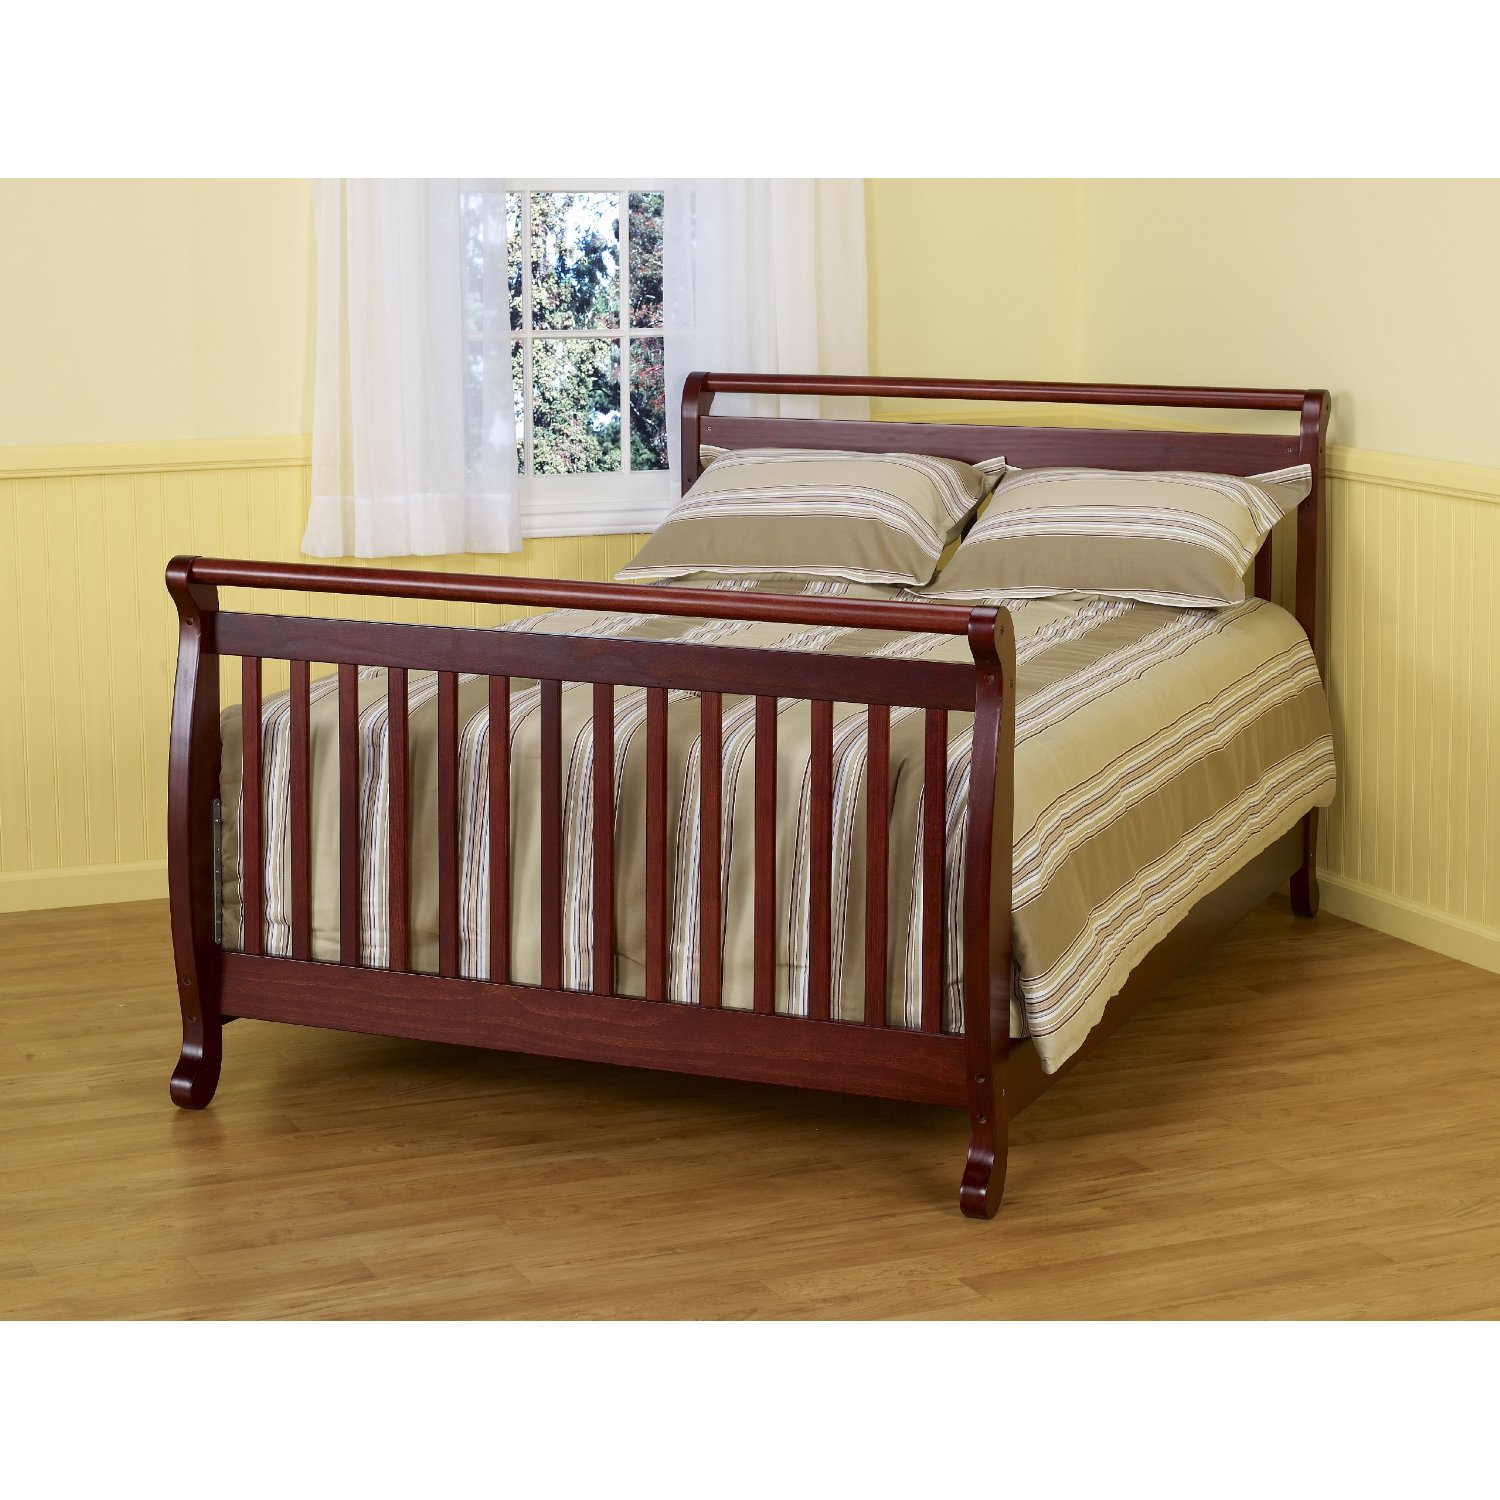 3 in 1 baby crib plans - Modern Baby Crib Sets